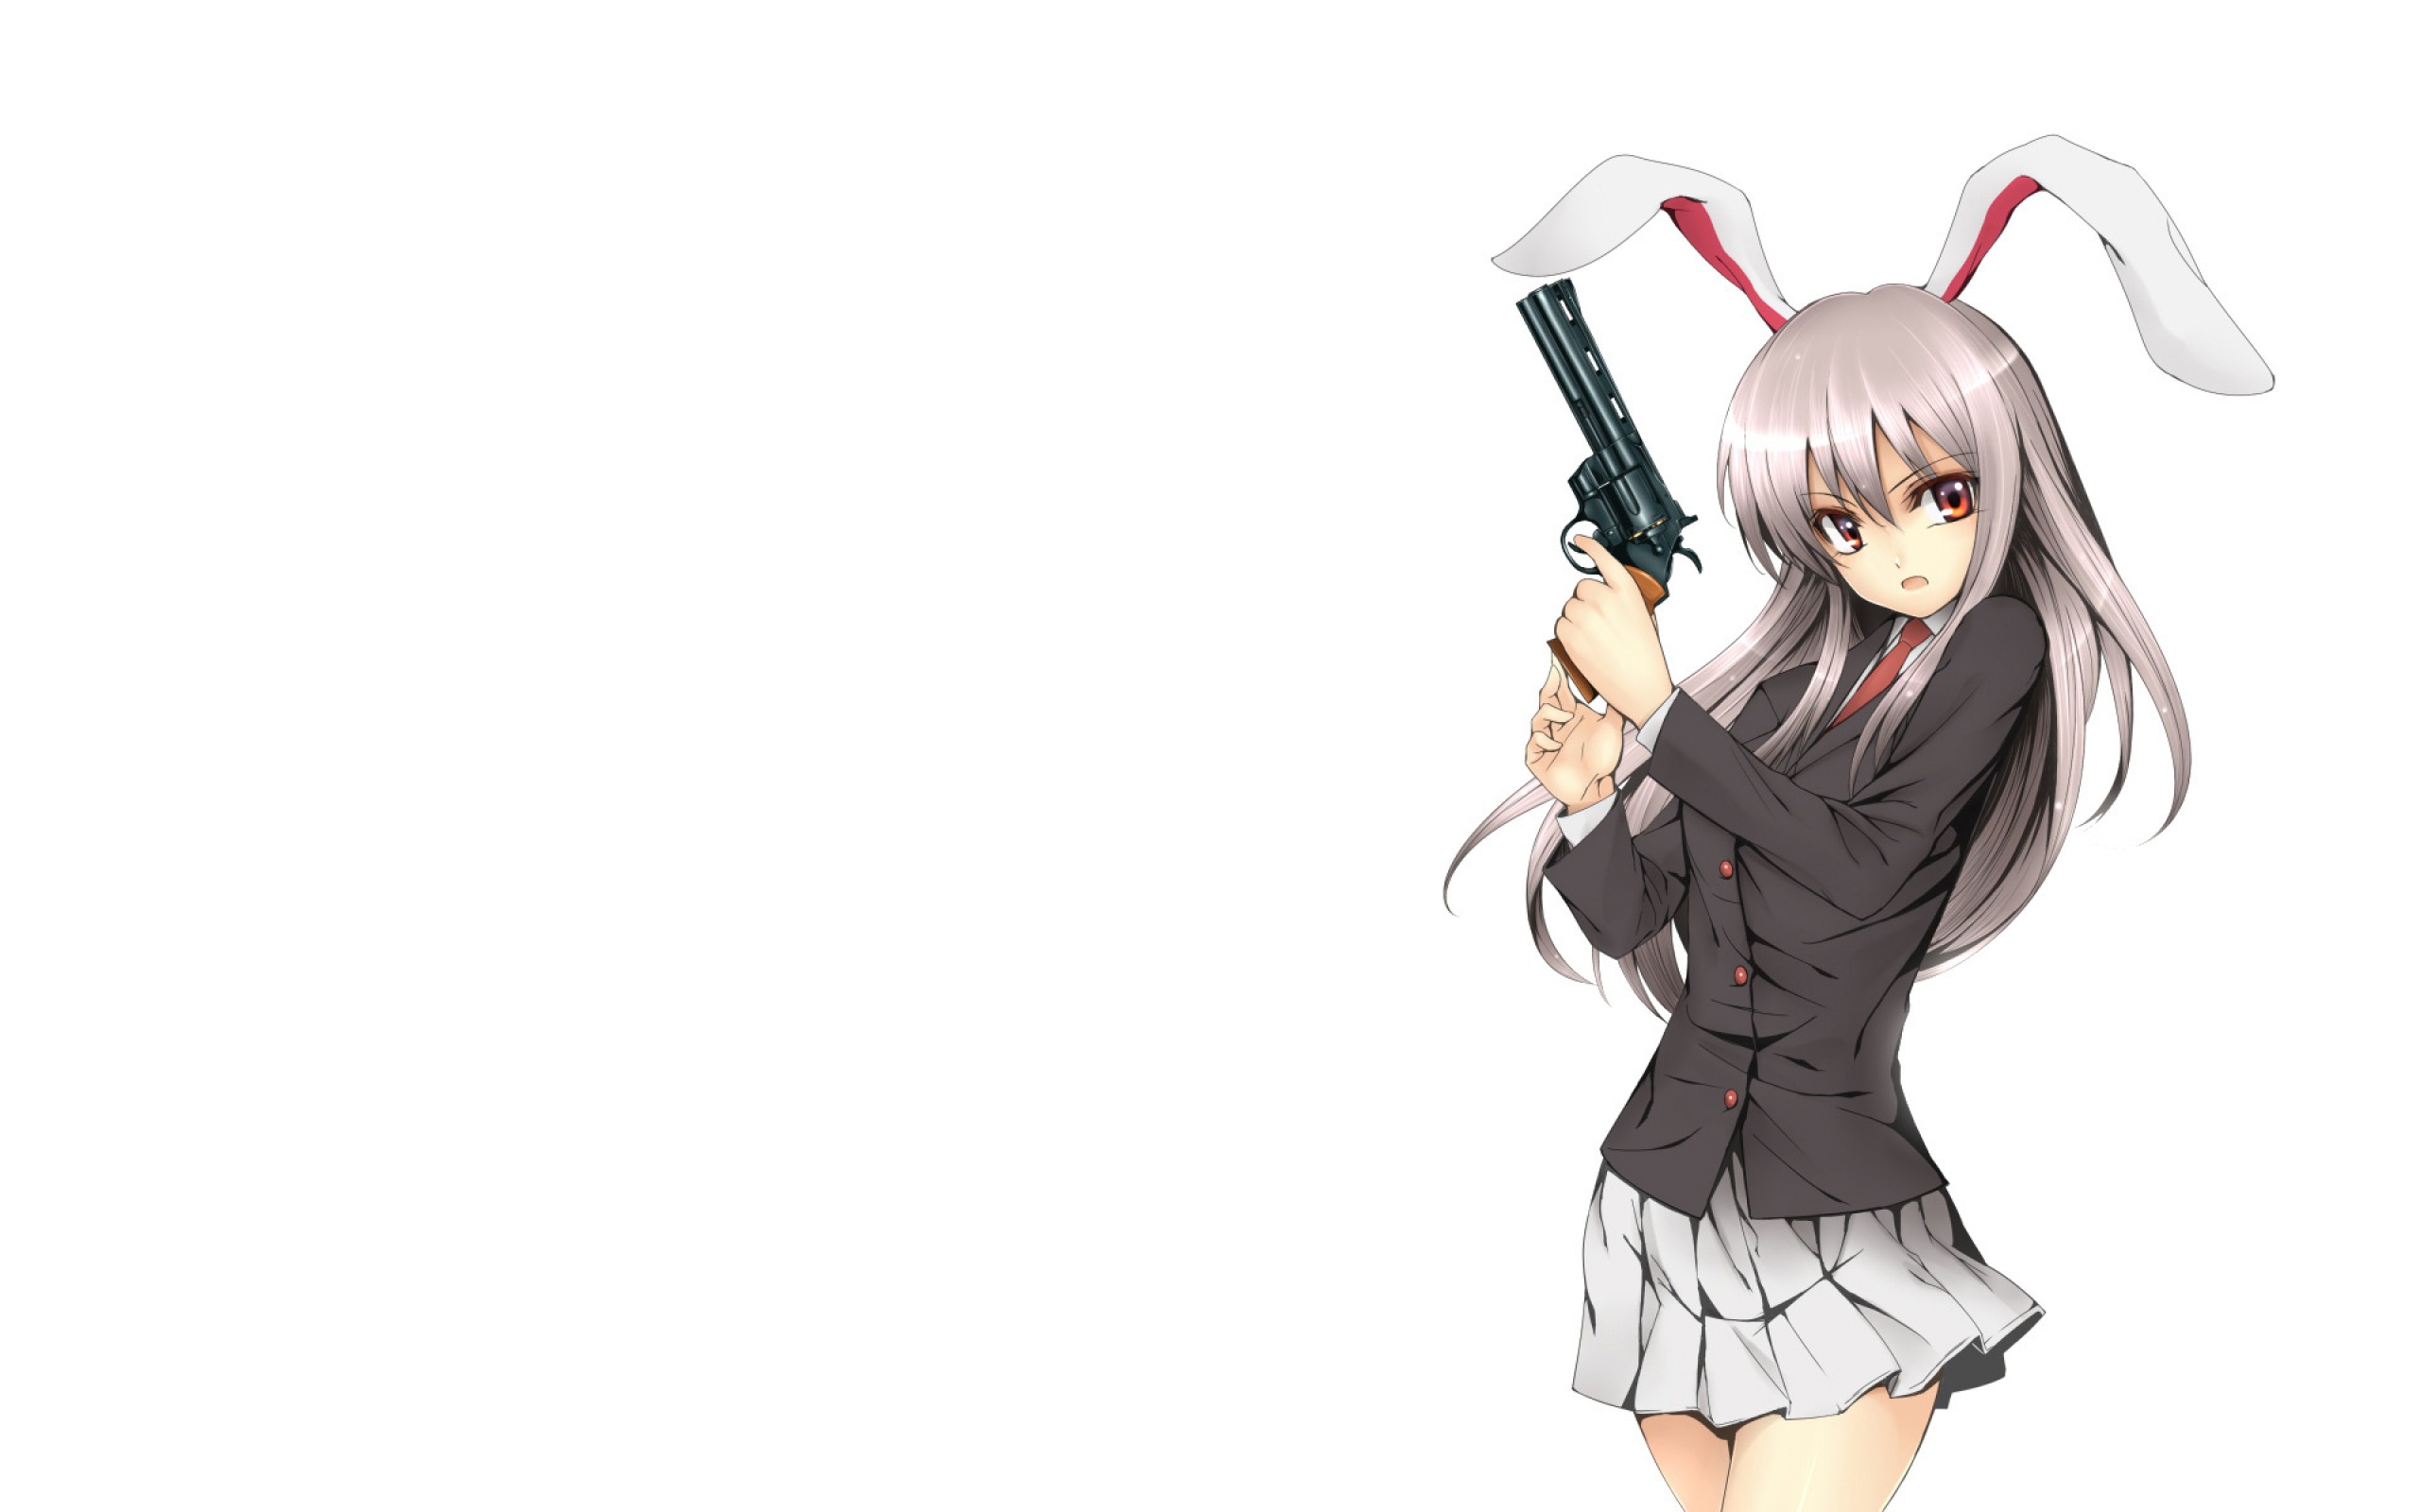 Anime Girl Holding Gun Wallpaper In High Resolution At